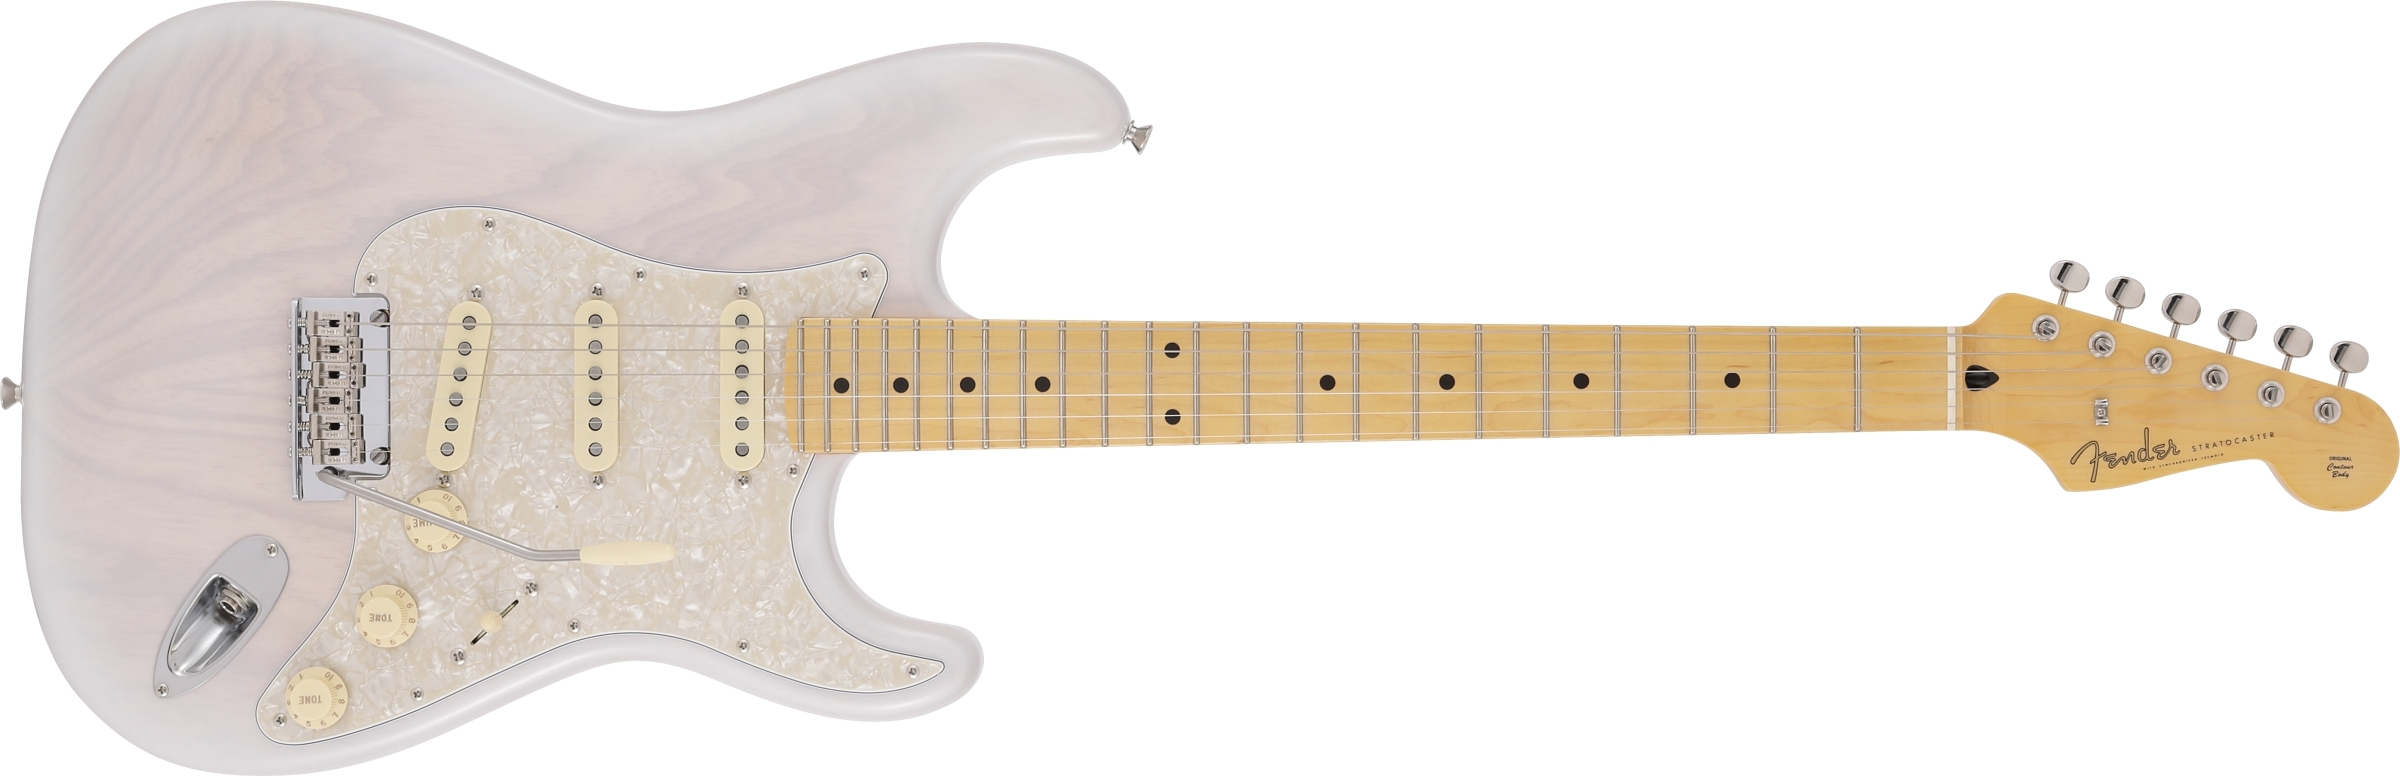 A Japan-only Fender Stratocaster